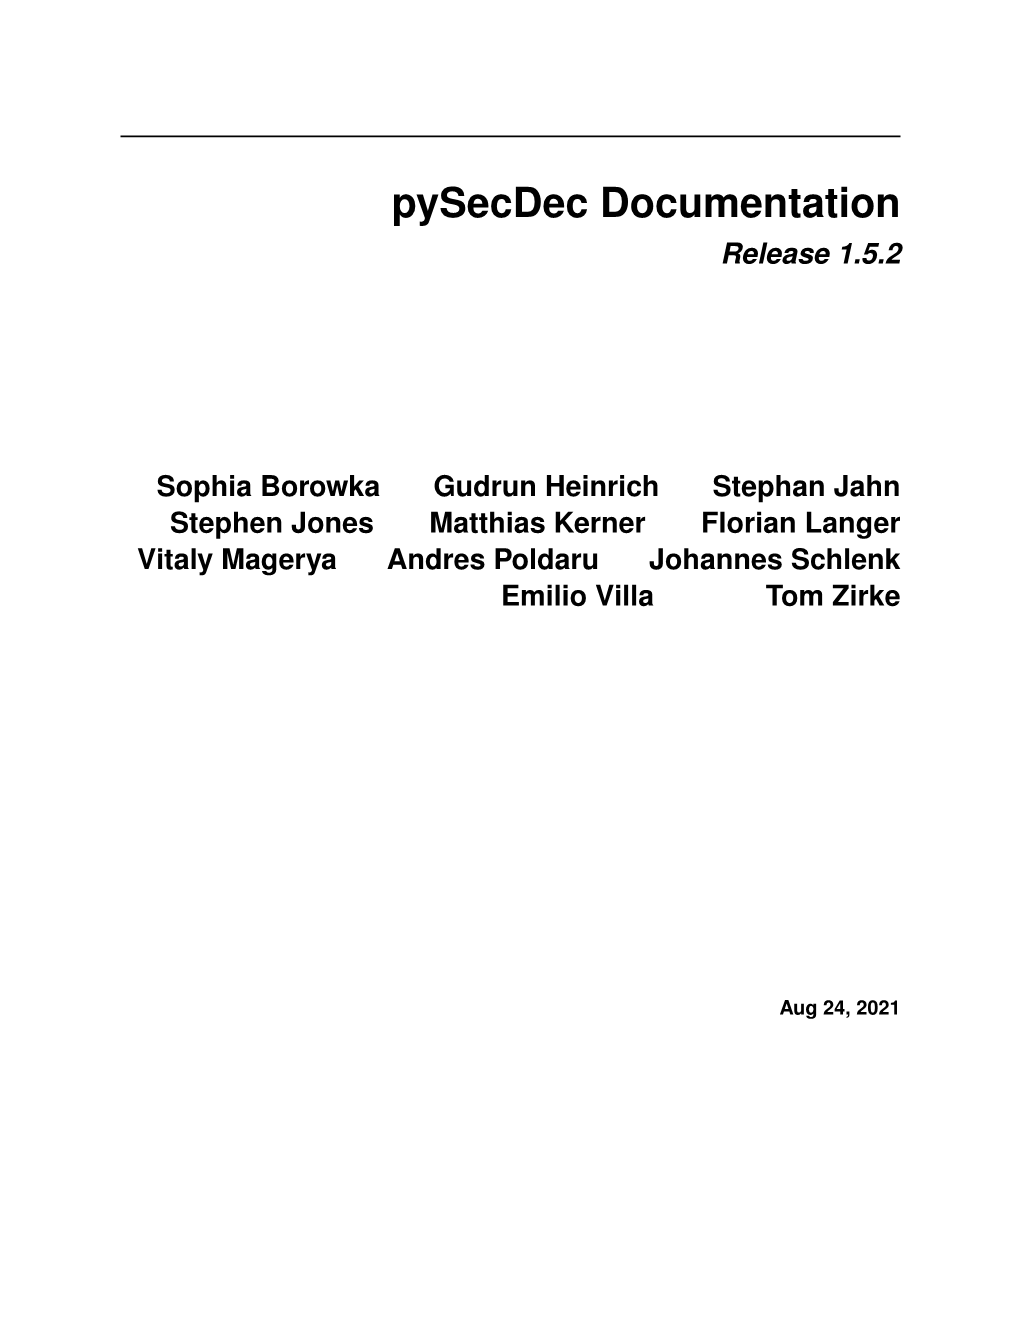 Pysecdec Documentation Release 1.5.2